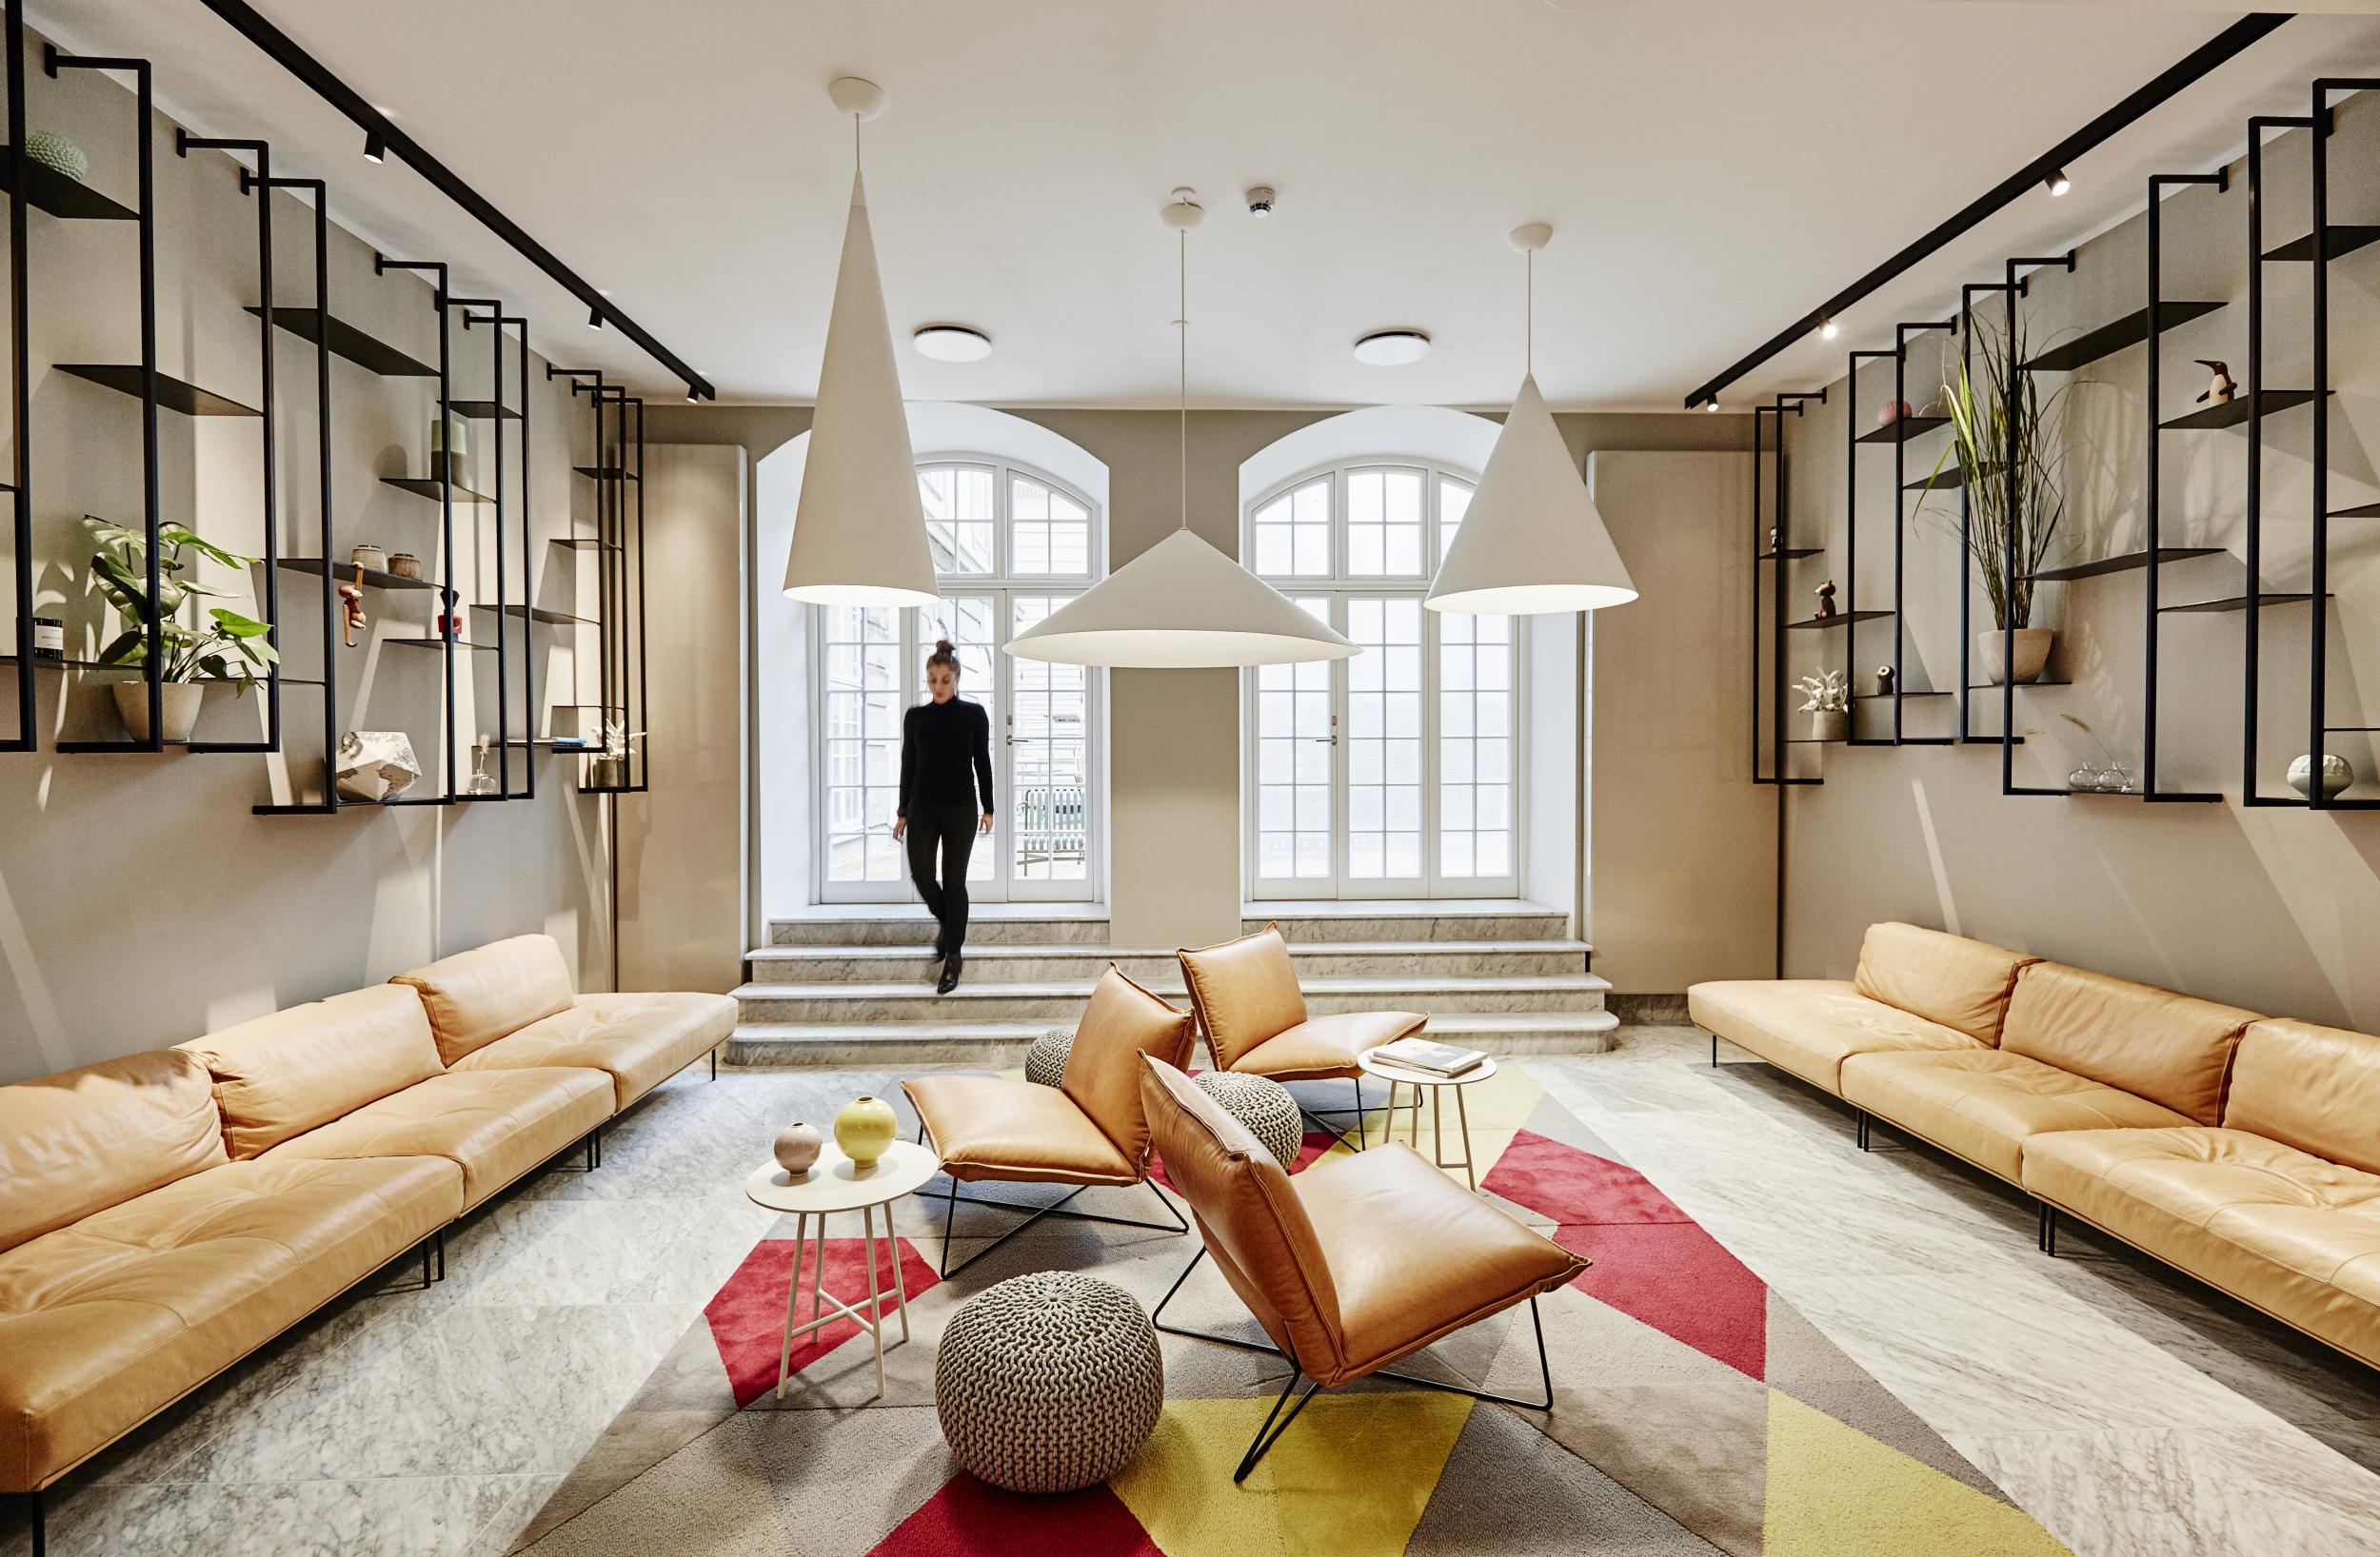 Copenhagen's hotels, like the Nobis, are the height of Scandi chic